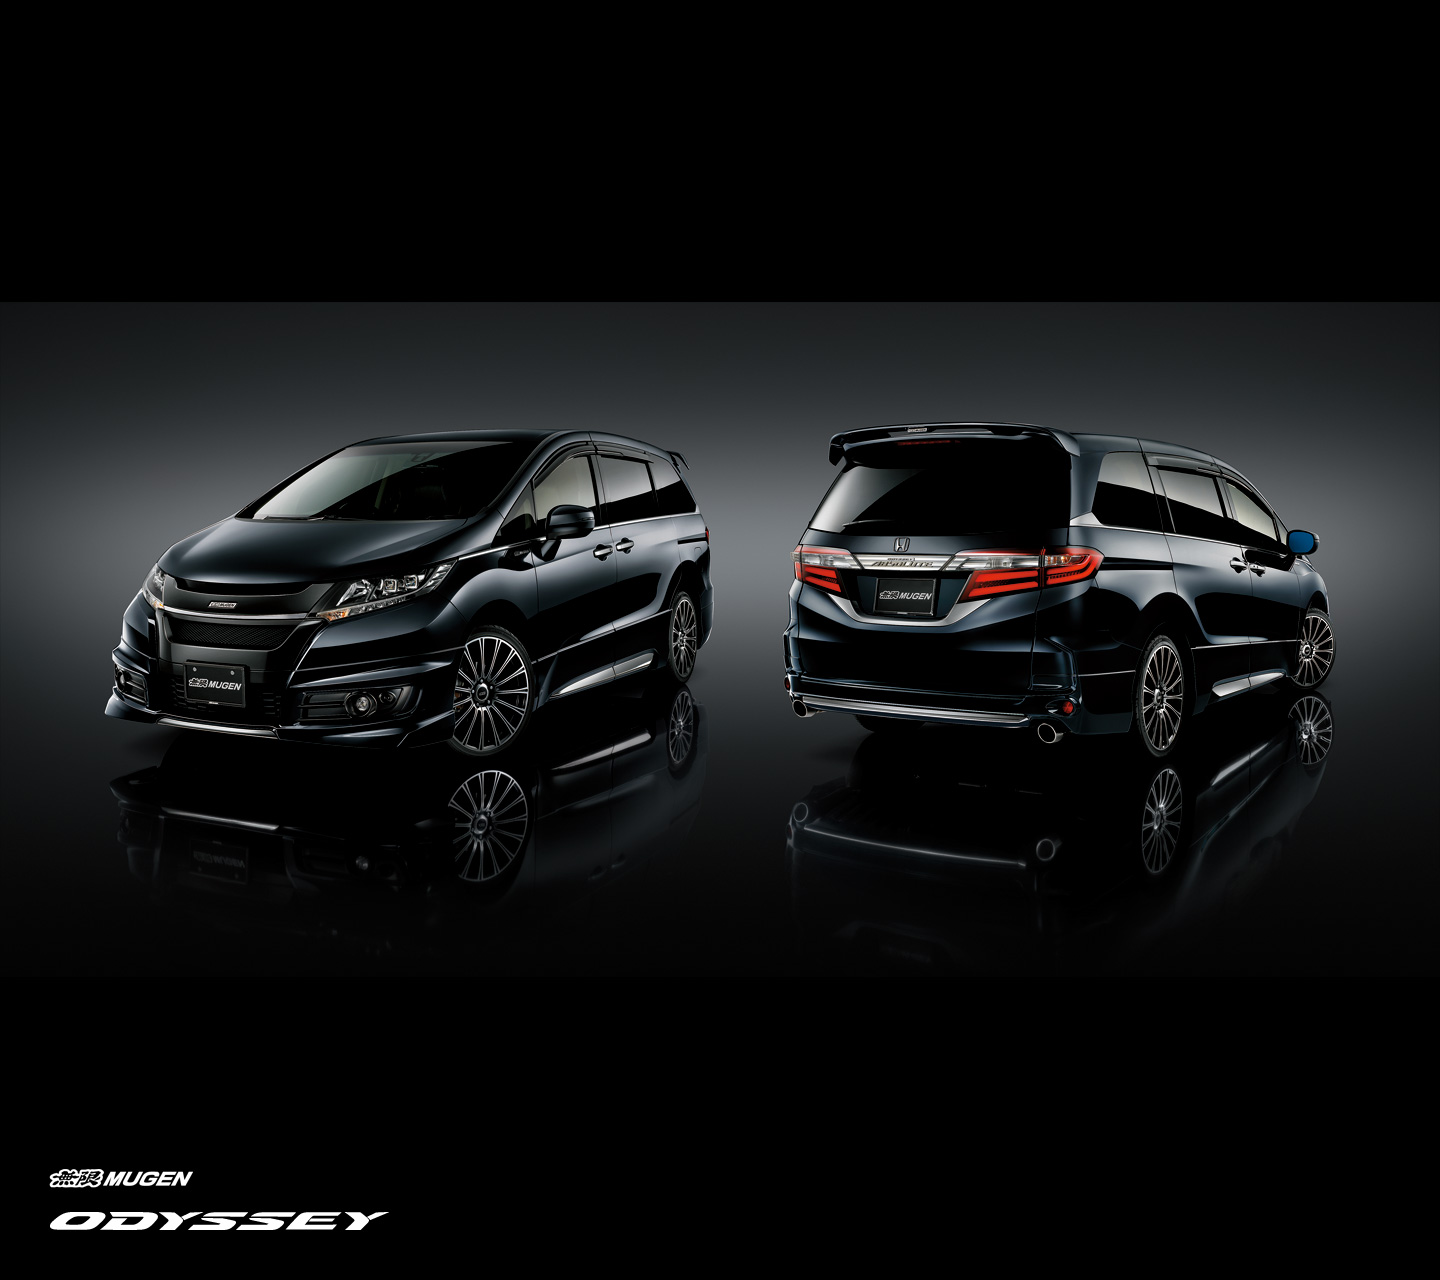 Honda, Honda Odyssey Absolute Mugen tuned: Honda Oddyssey 2014 Mugen Edition Tampil Lebih Sporty [with Video]